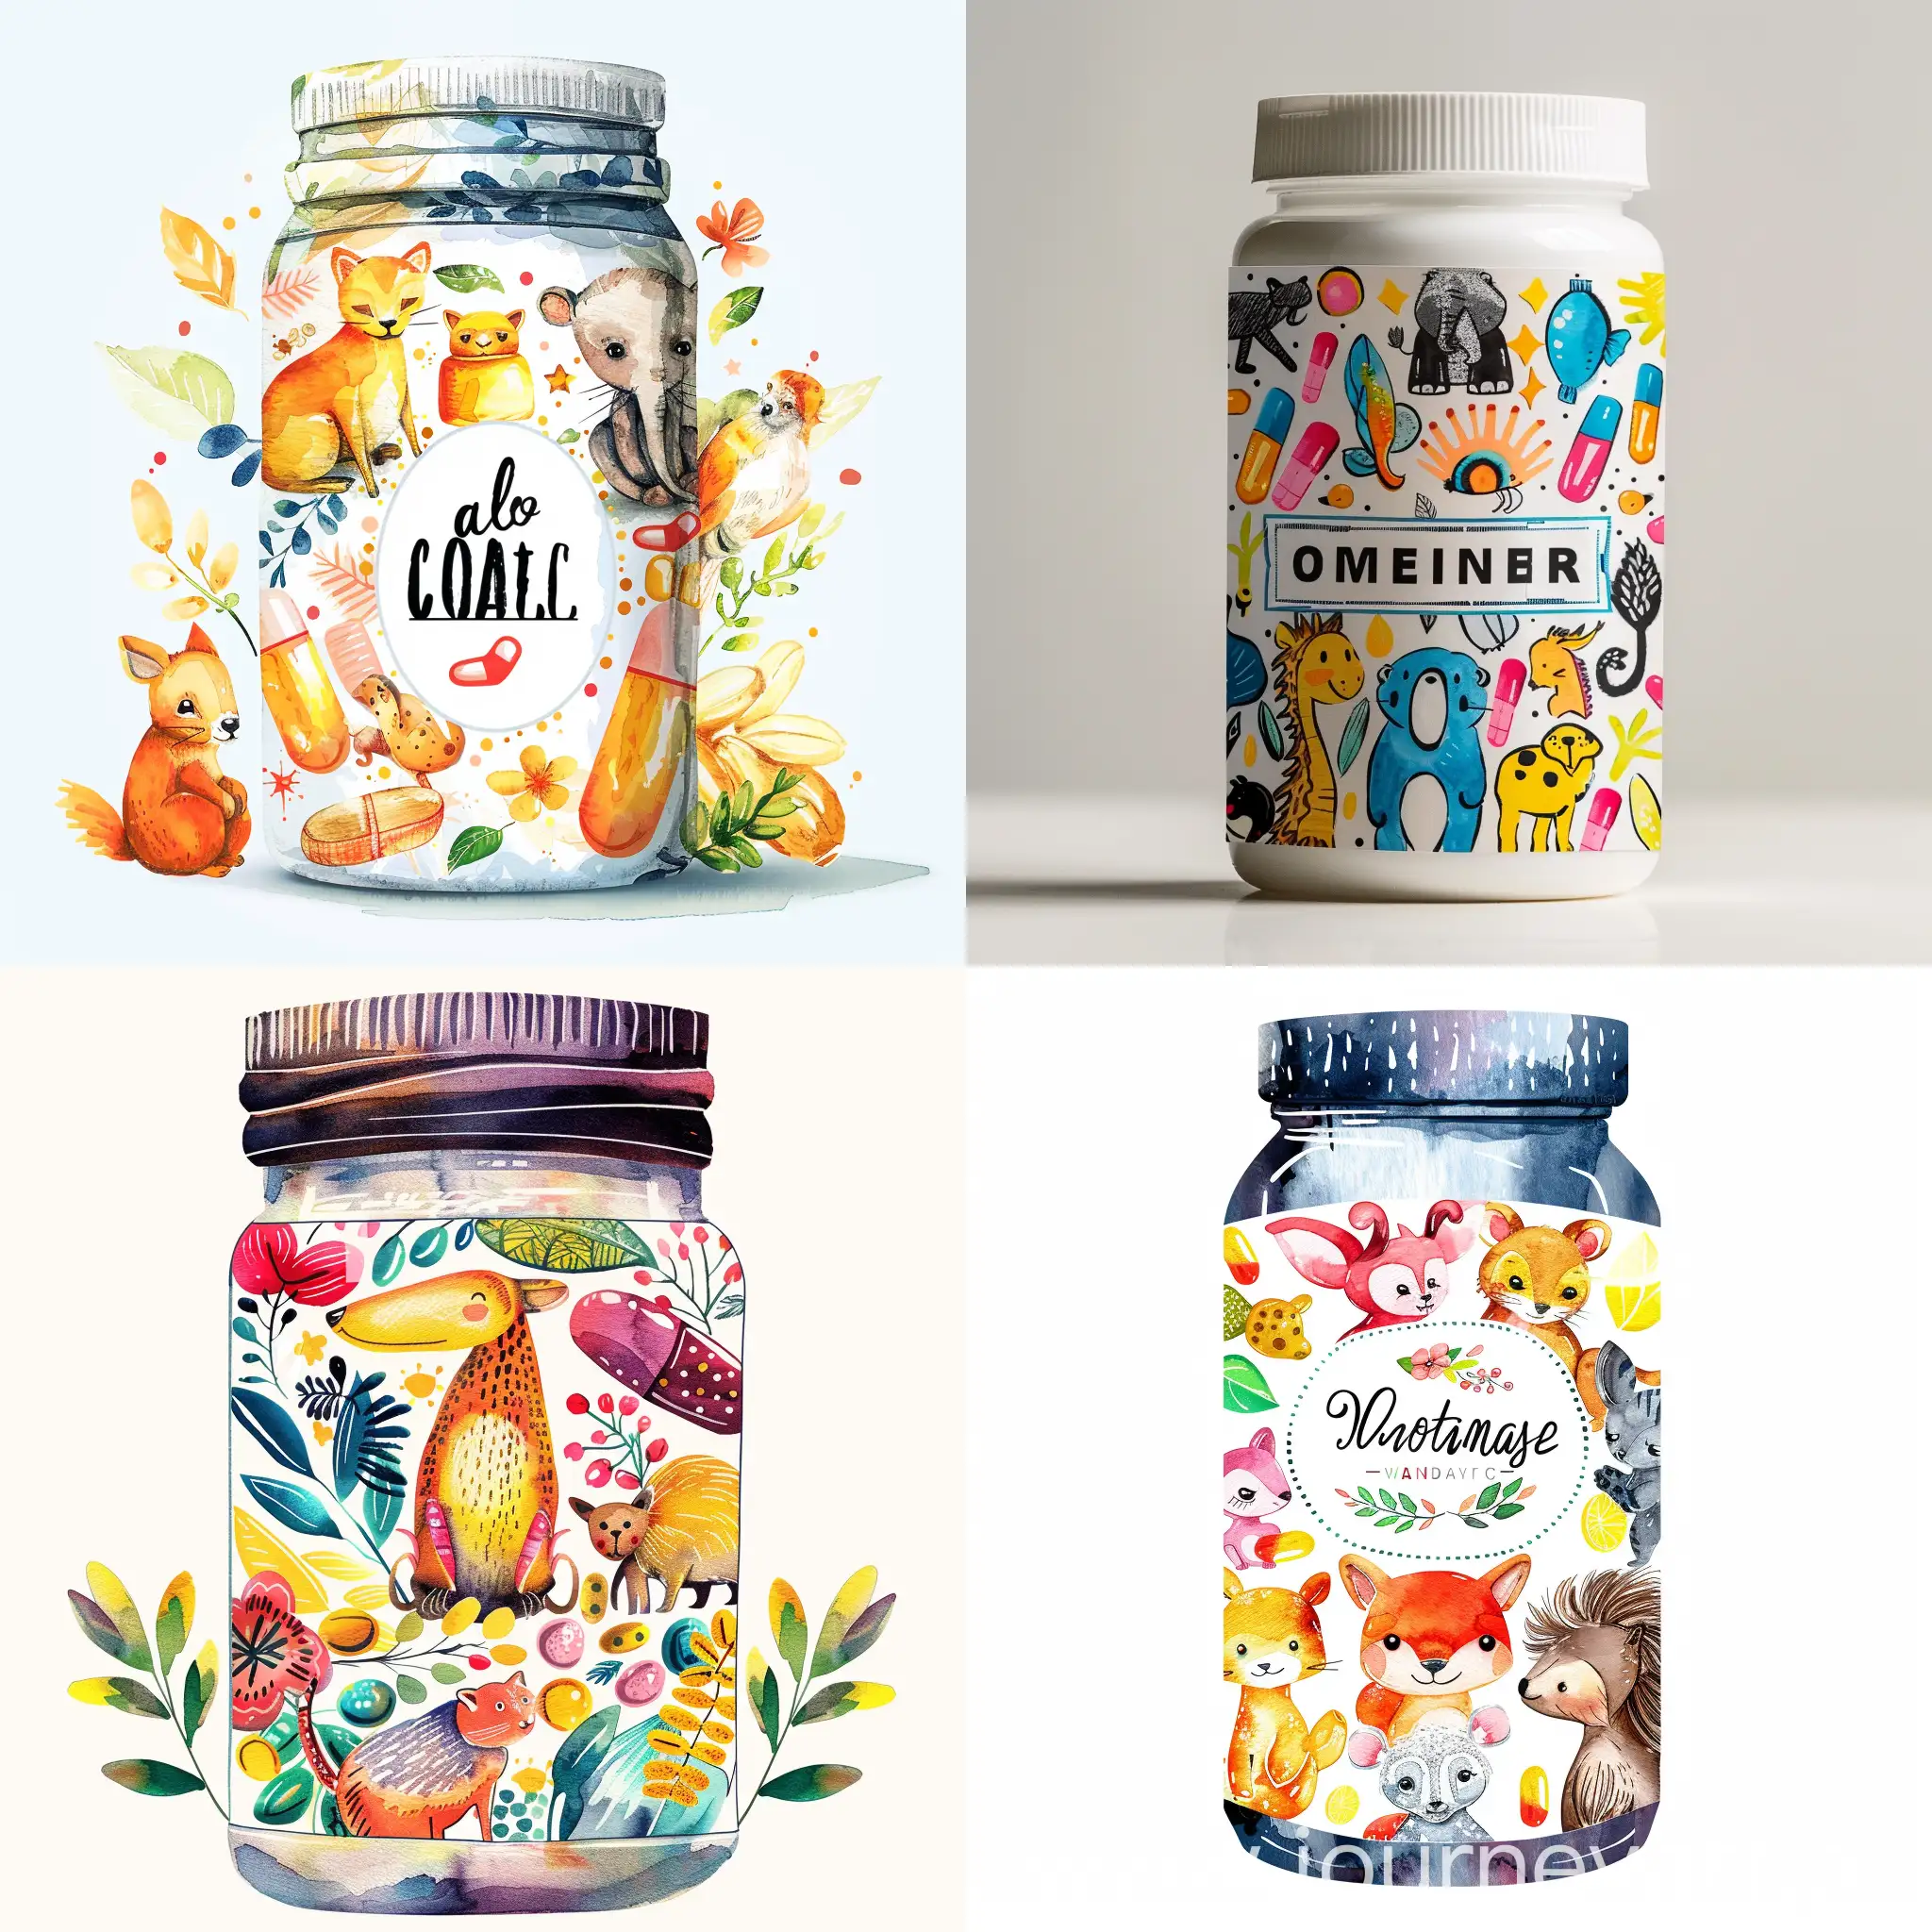 Vitamin label design, with bright watercolor animals, jar